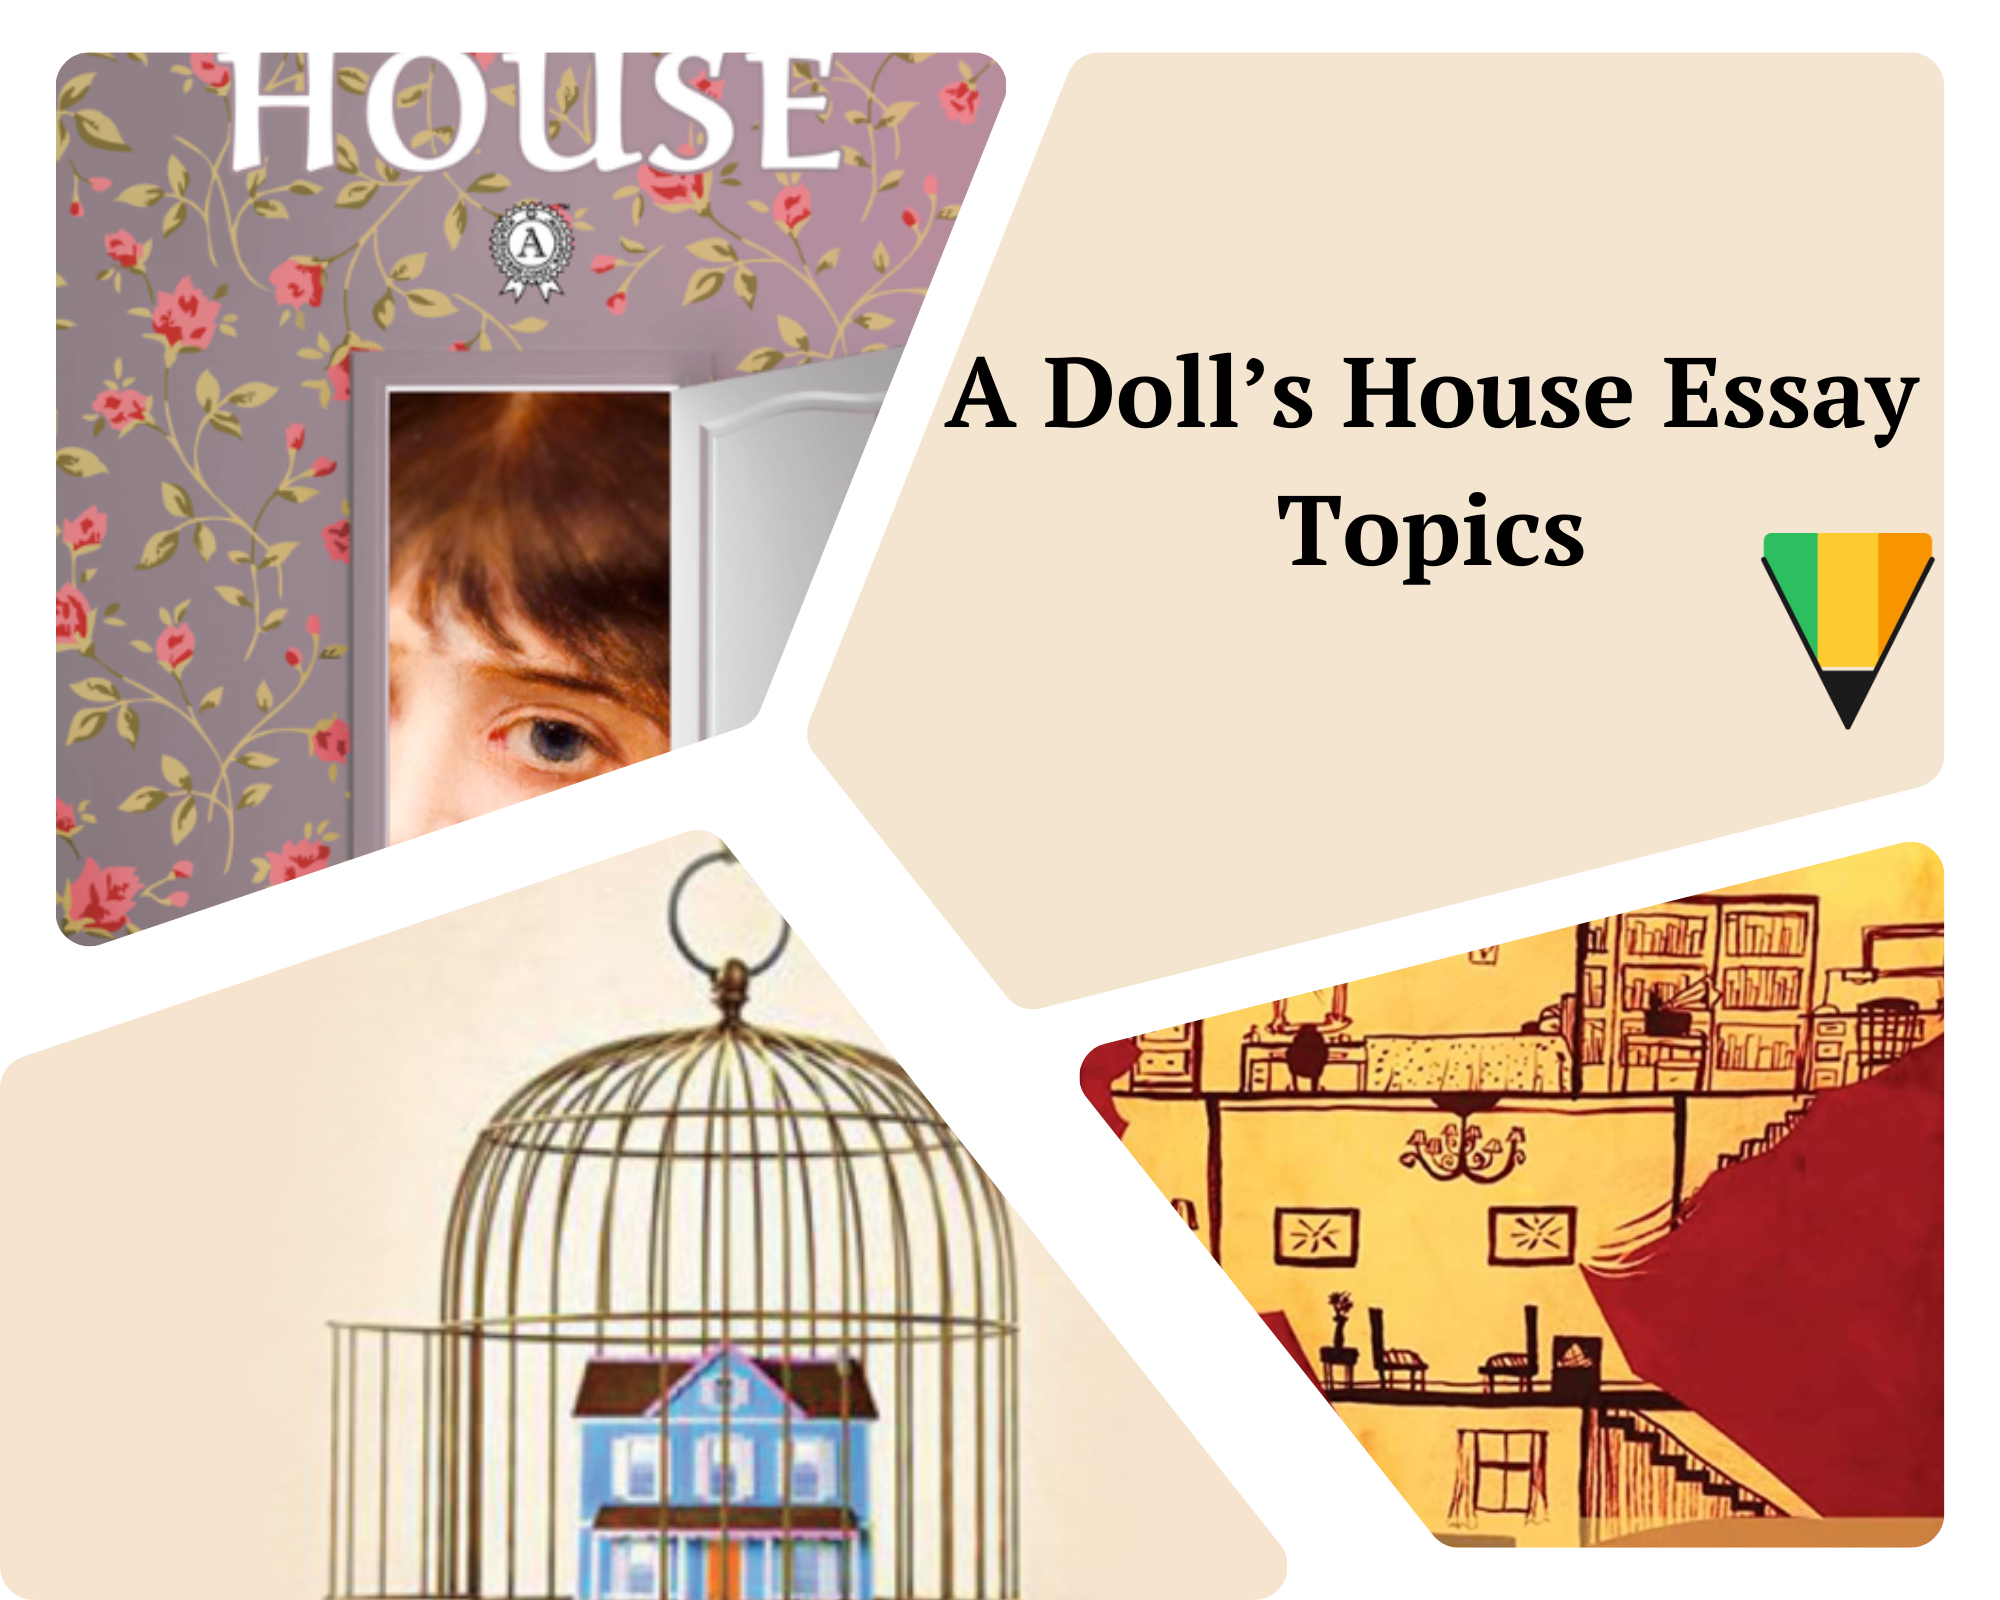 A Doll’s House Essay Topics